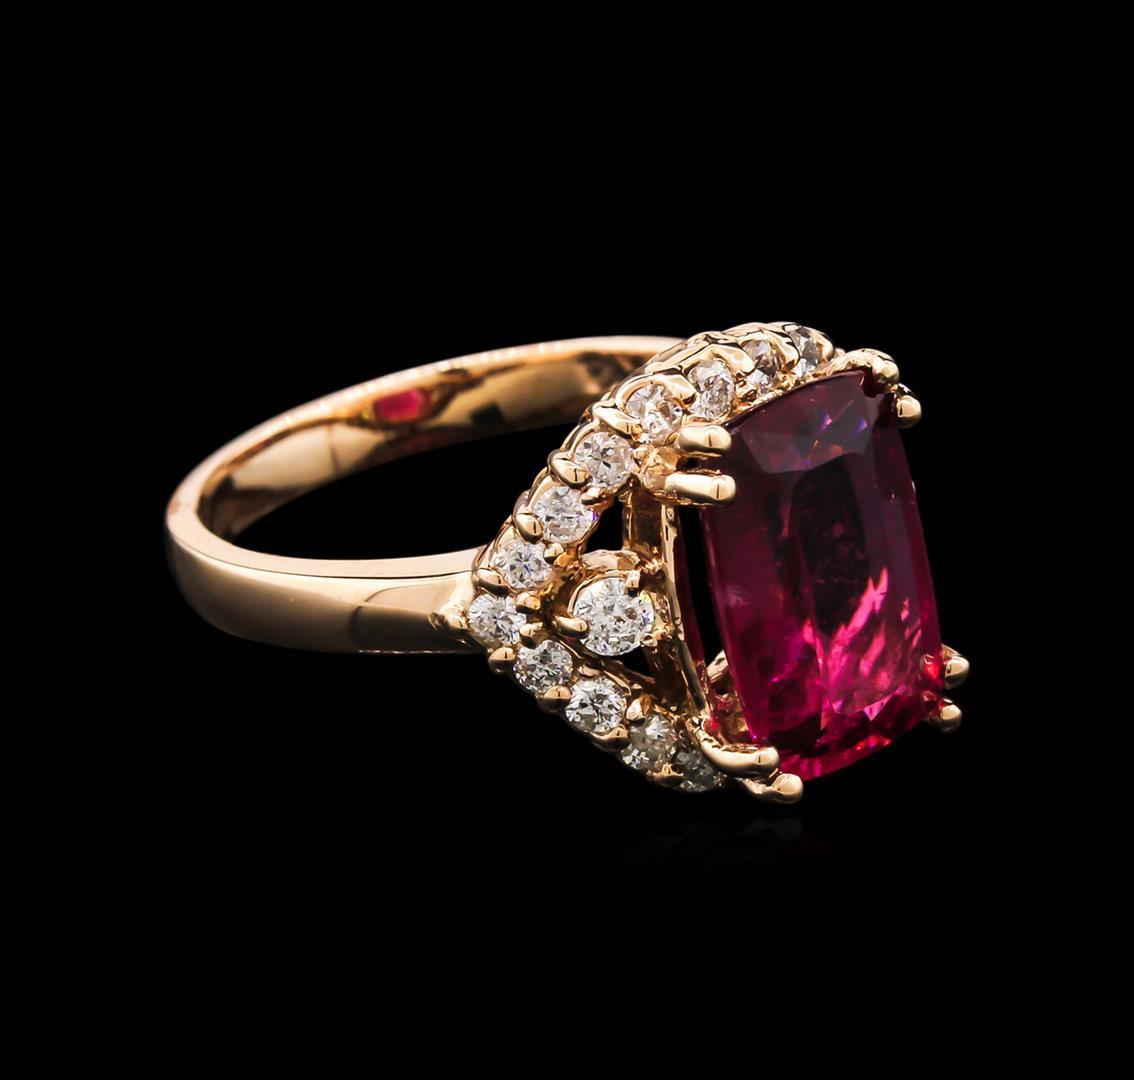 3.35 ctw Pink Tourmaline and Diamond Ring - 14KT Rose Gold